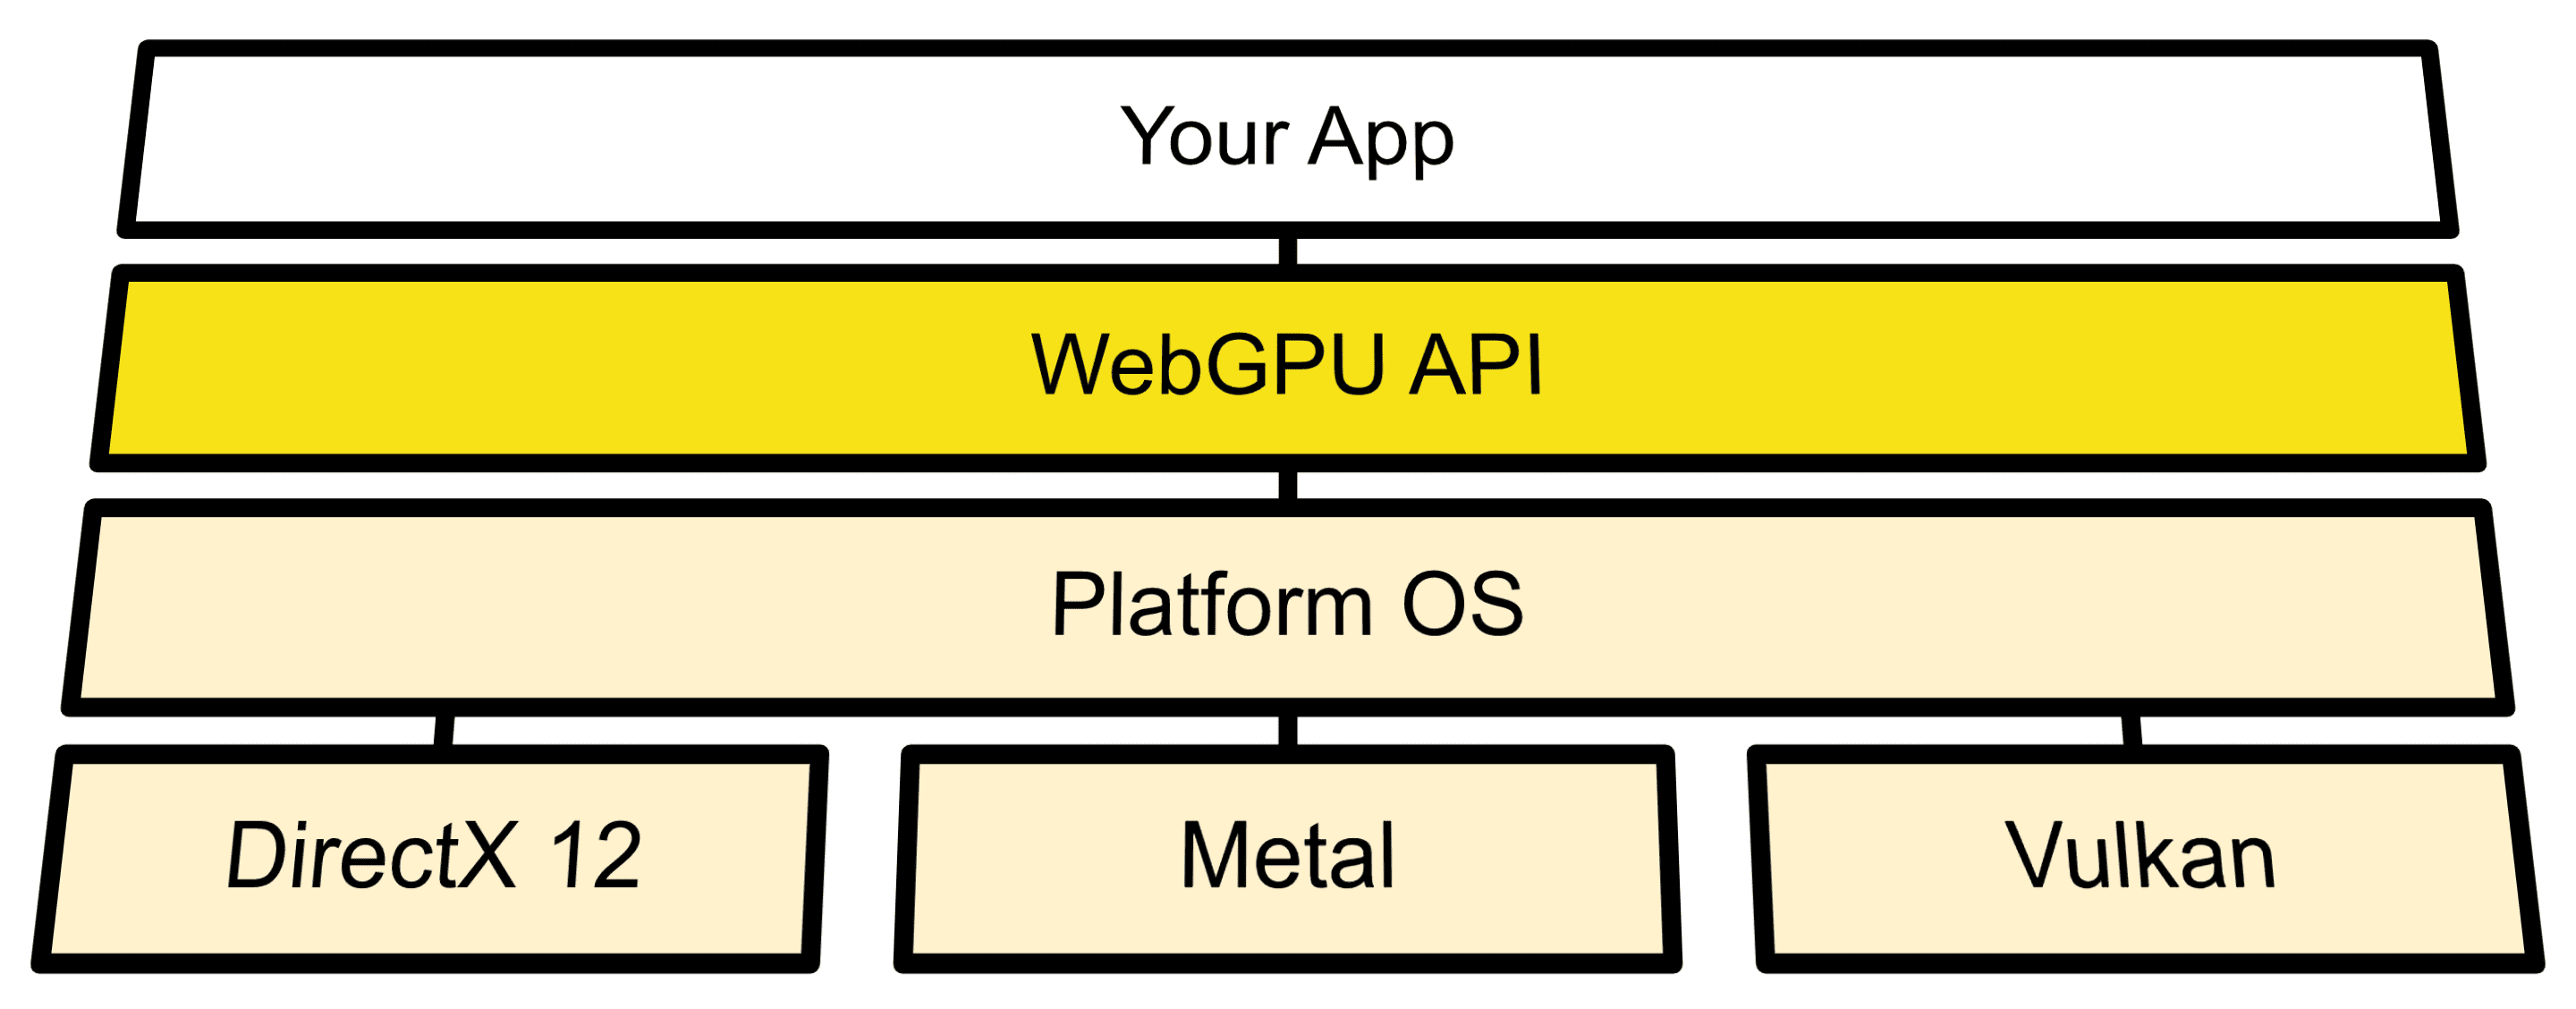 OS API এবং Direct3D 12, Metal, এবং Vulkan এর মধ্যে WebGPUs সংযোগ দেখানো আর্কিটেকচার ডায়াগ্রাম।